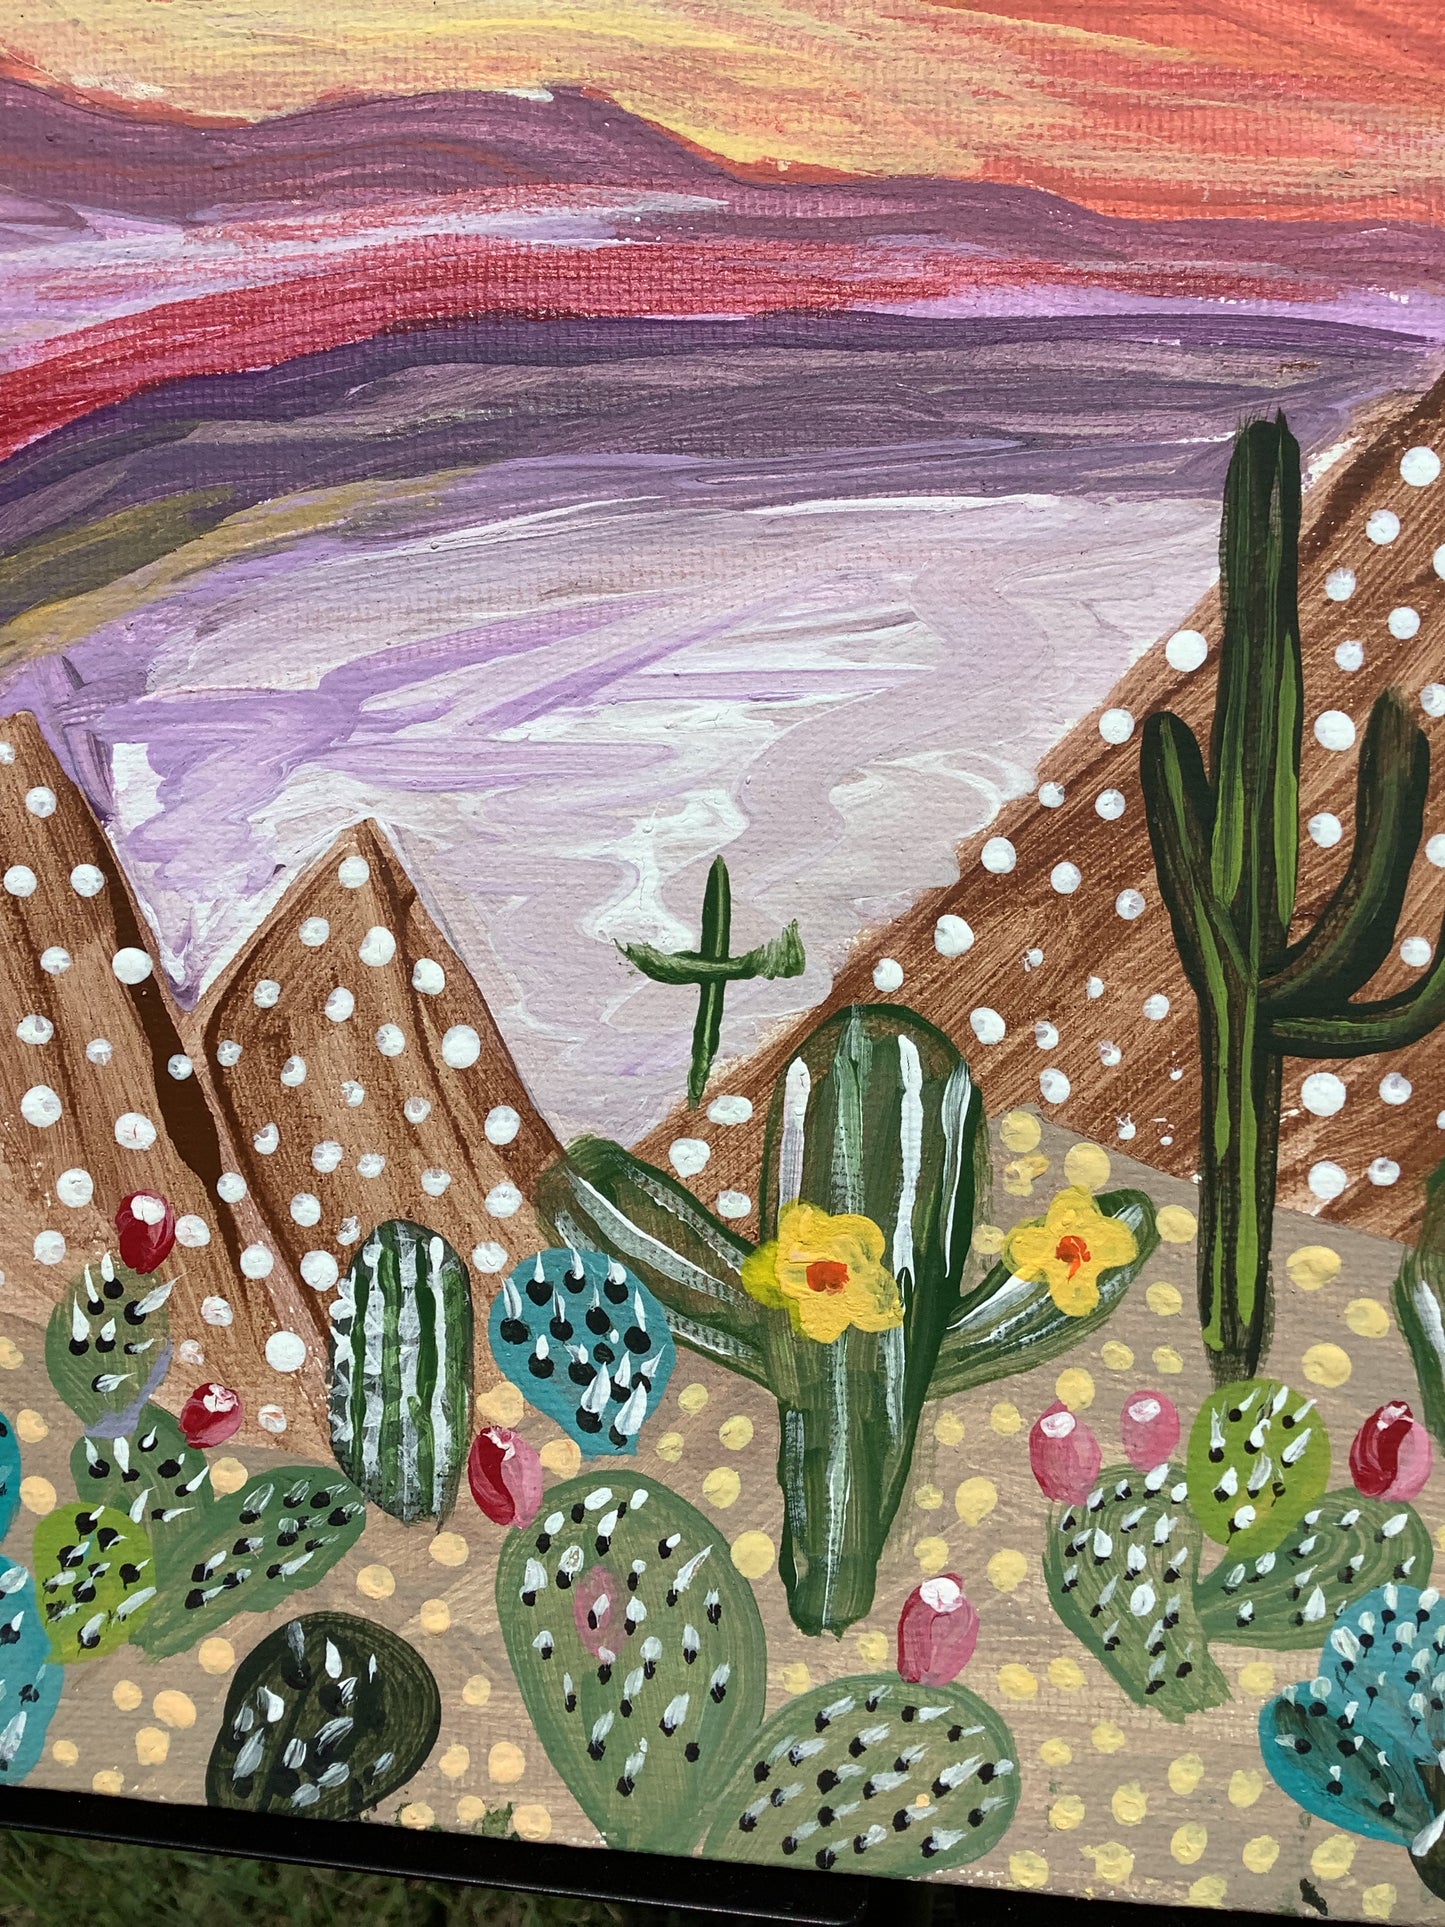 The Singing Desert 8" x 10"